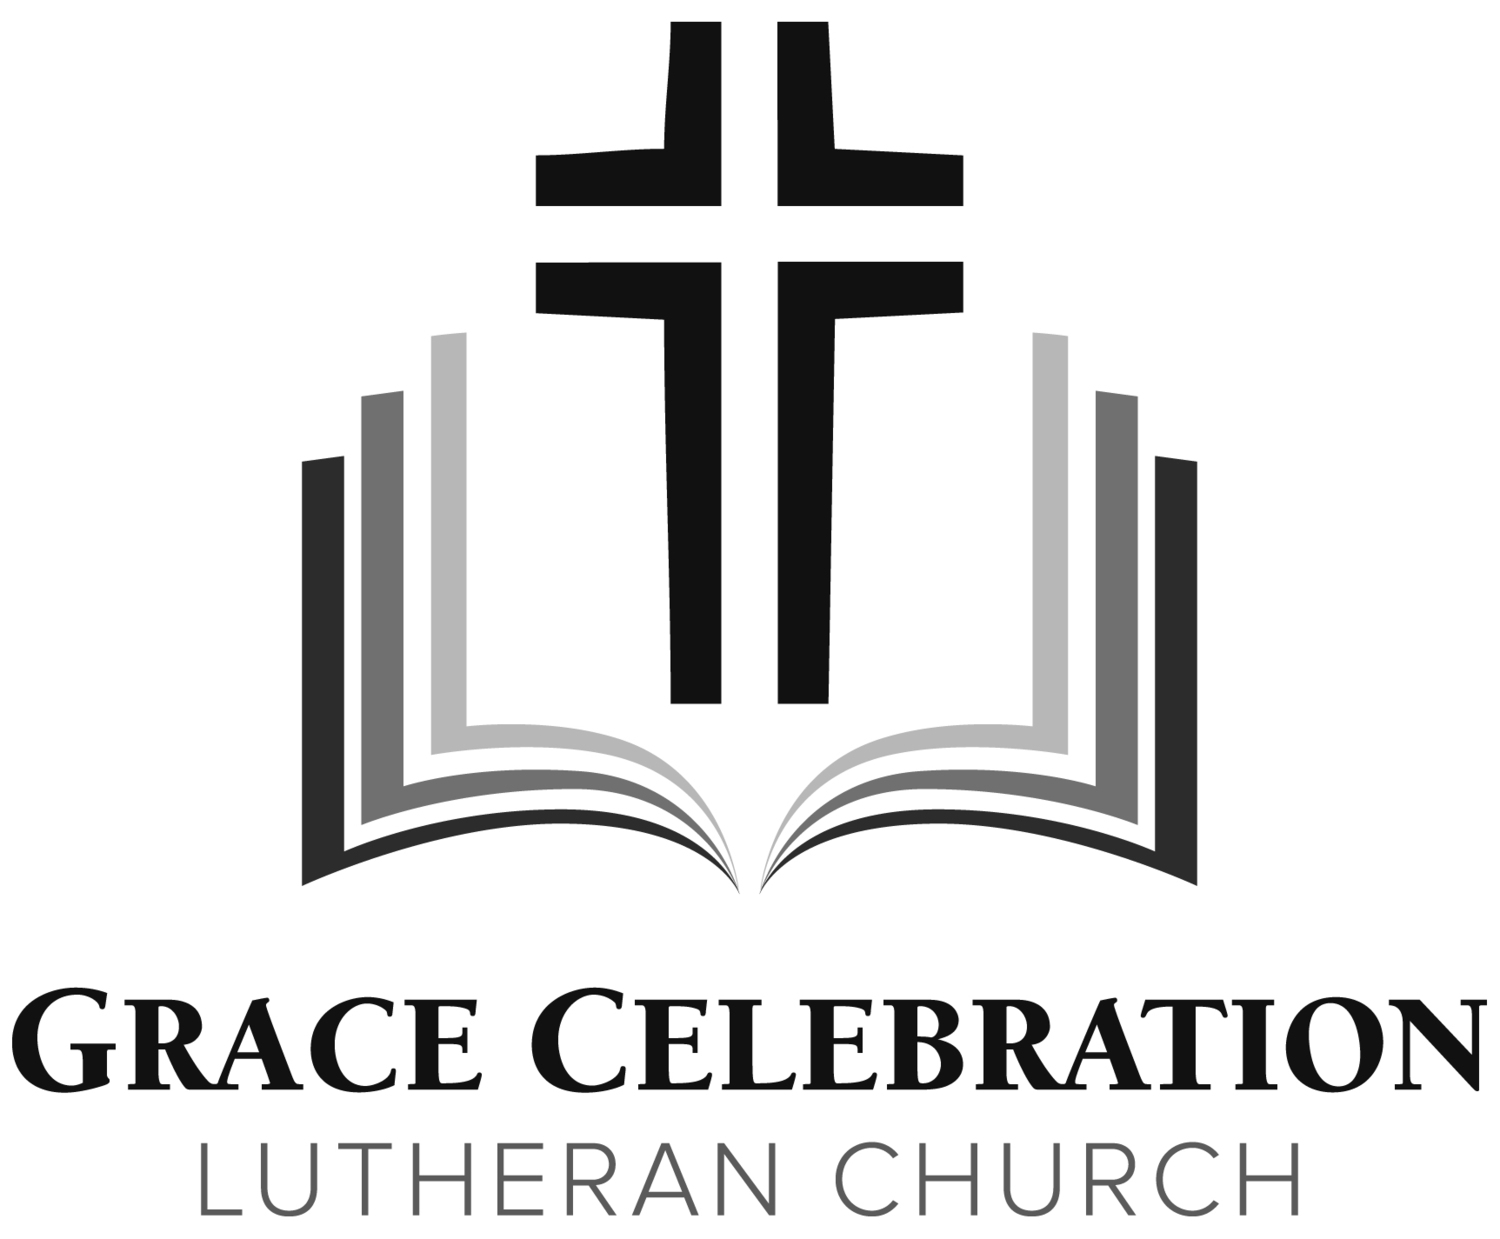 Grace Celebration Lutheran Church